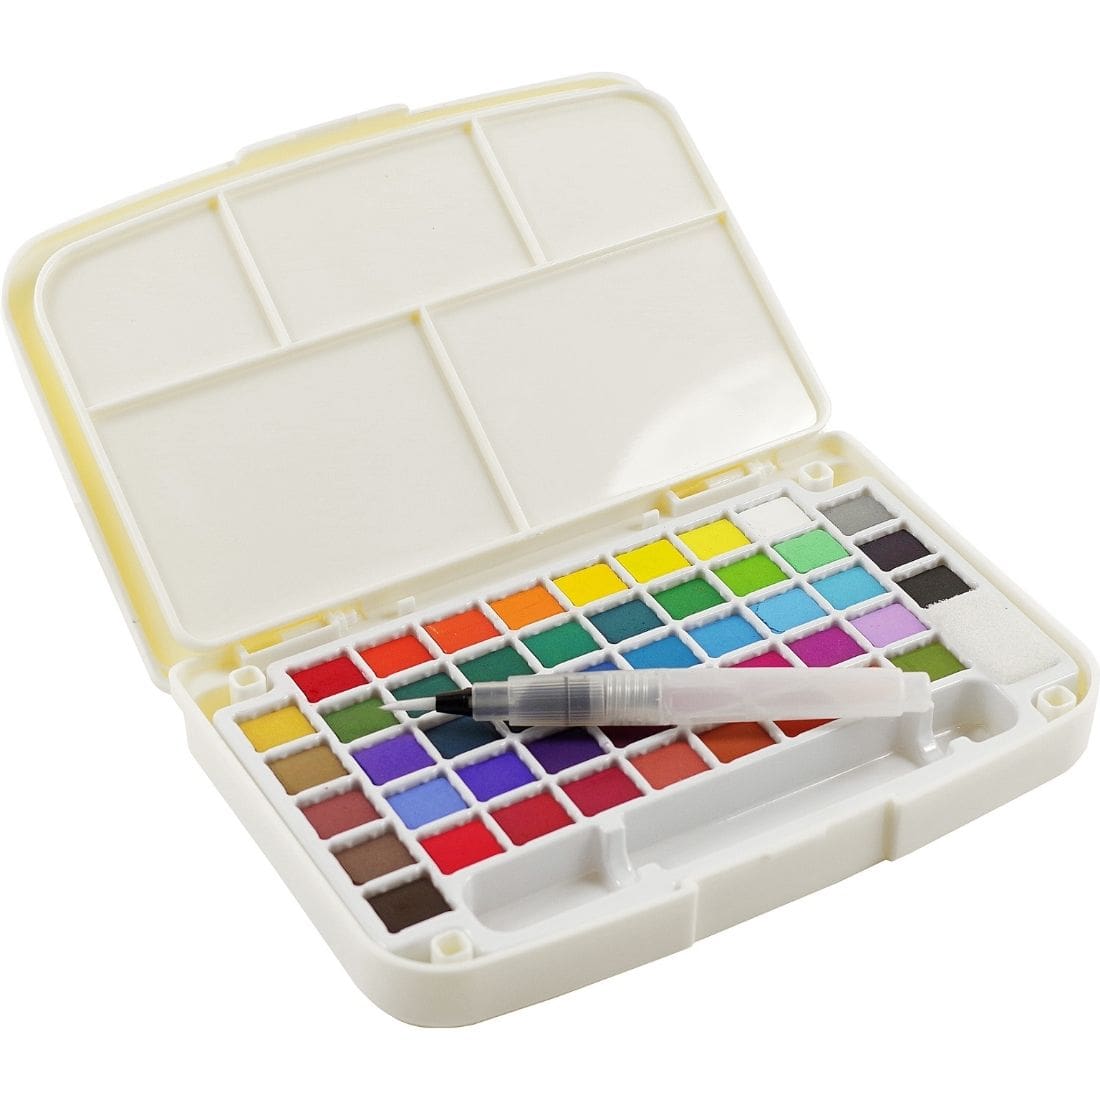 Peter Pauper Press watercolour field kit with a brush pen - Paper Kooka